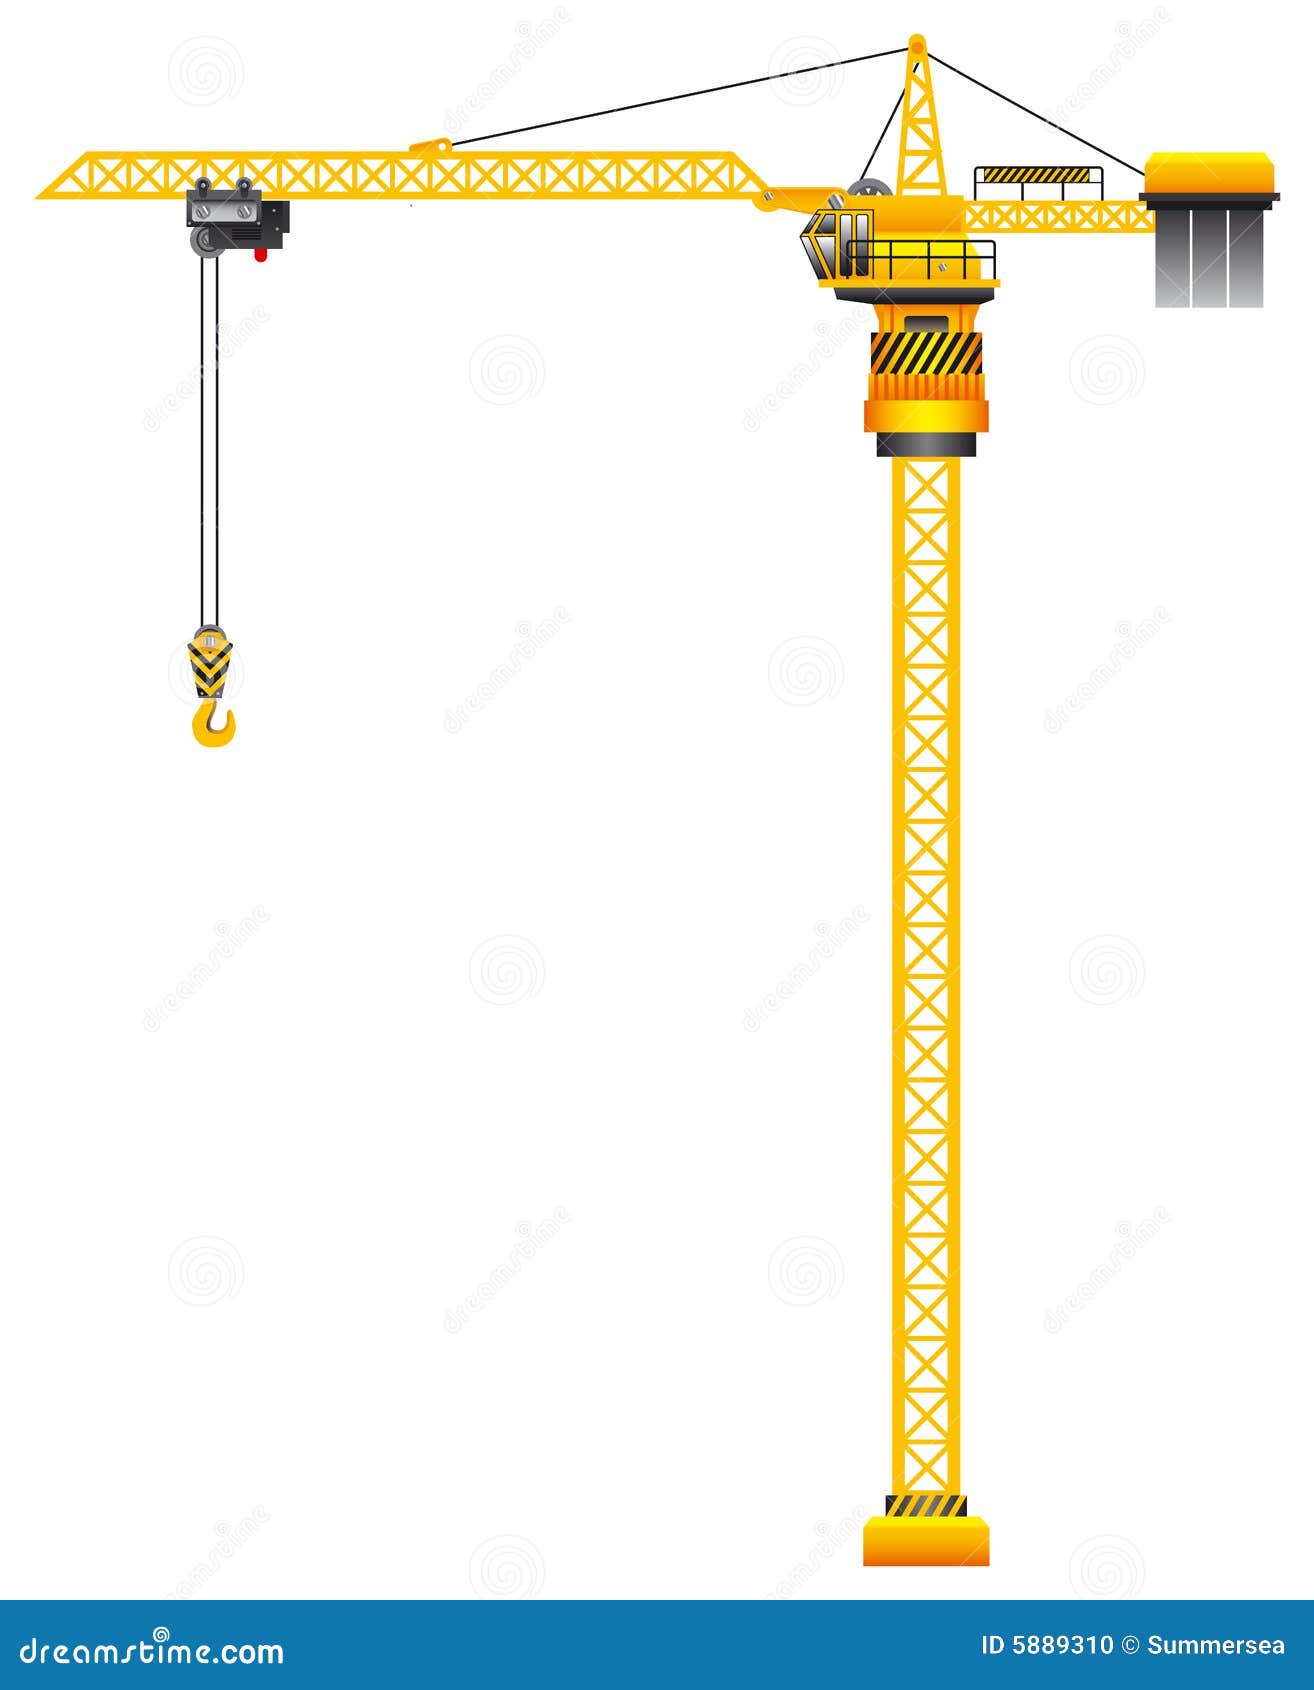 tower crane 